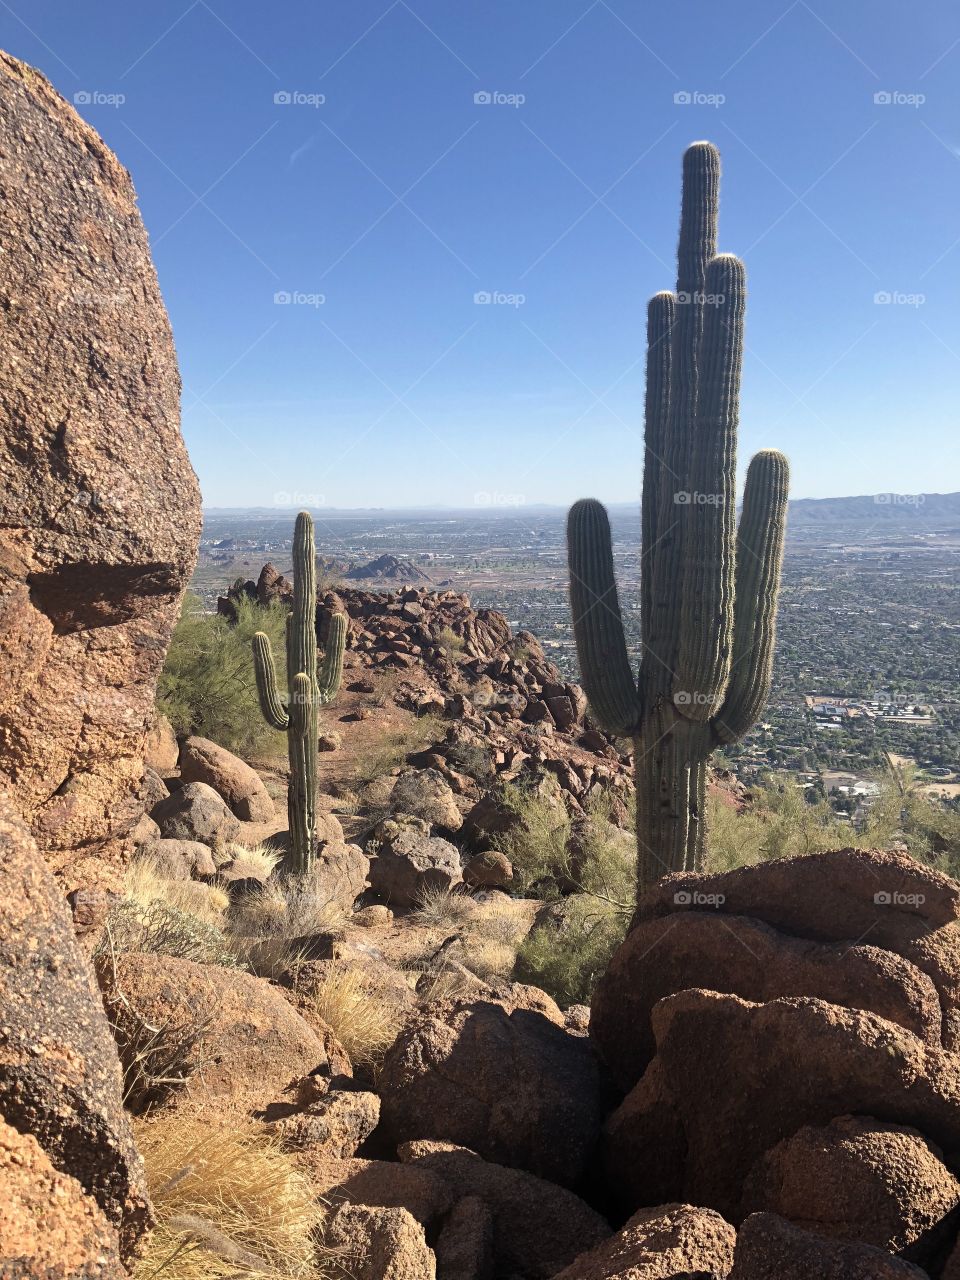 Desert landscape with cactuses 